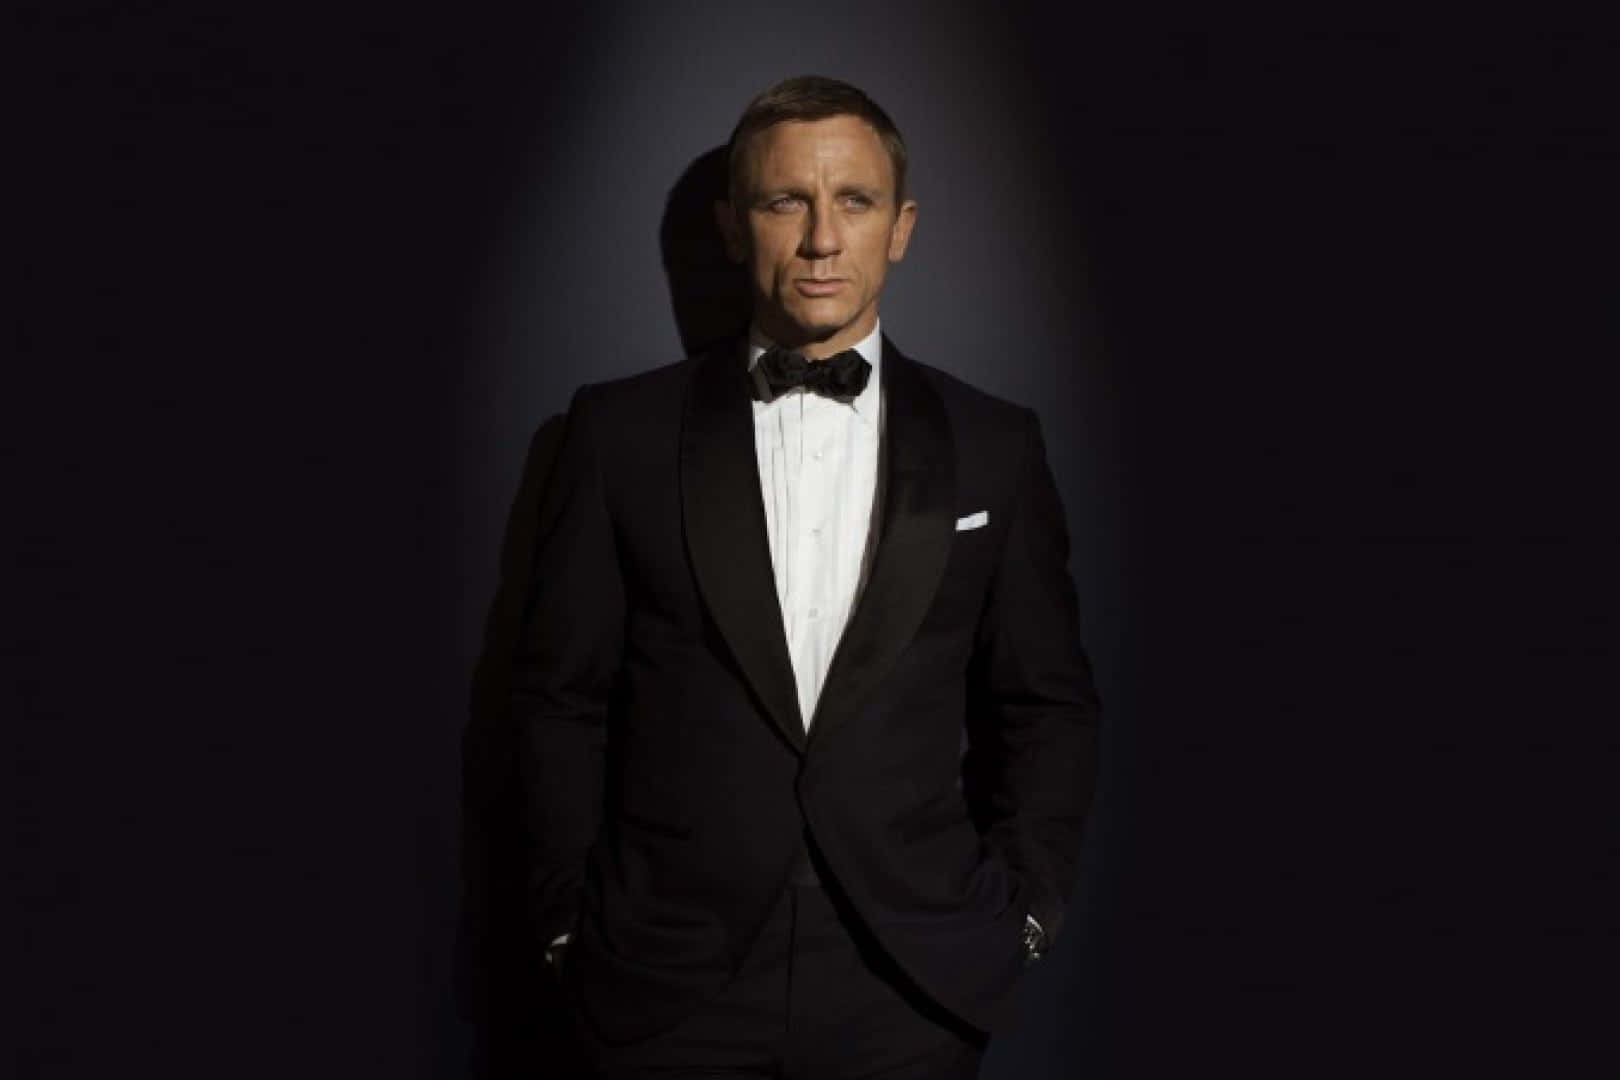 “The ultimate spy, James Bond”